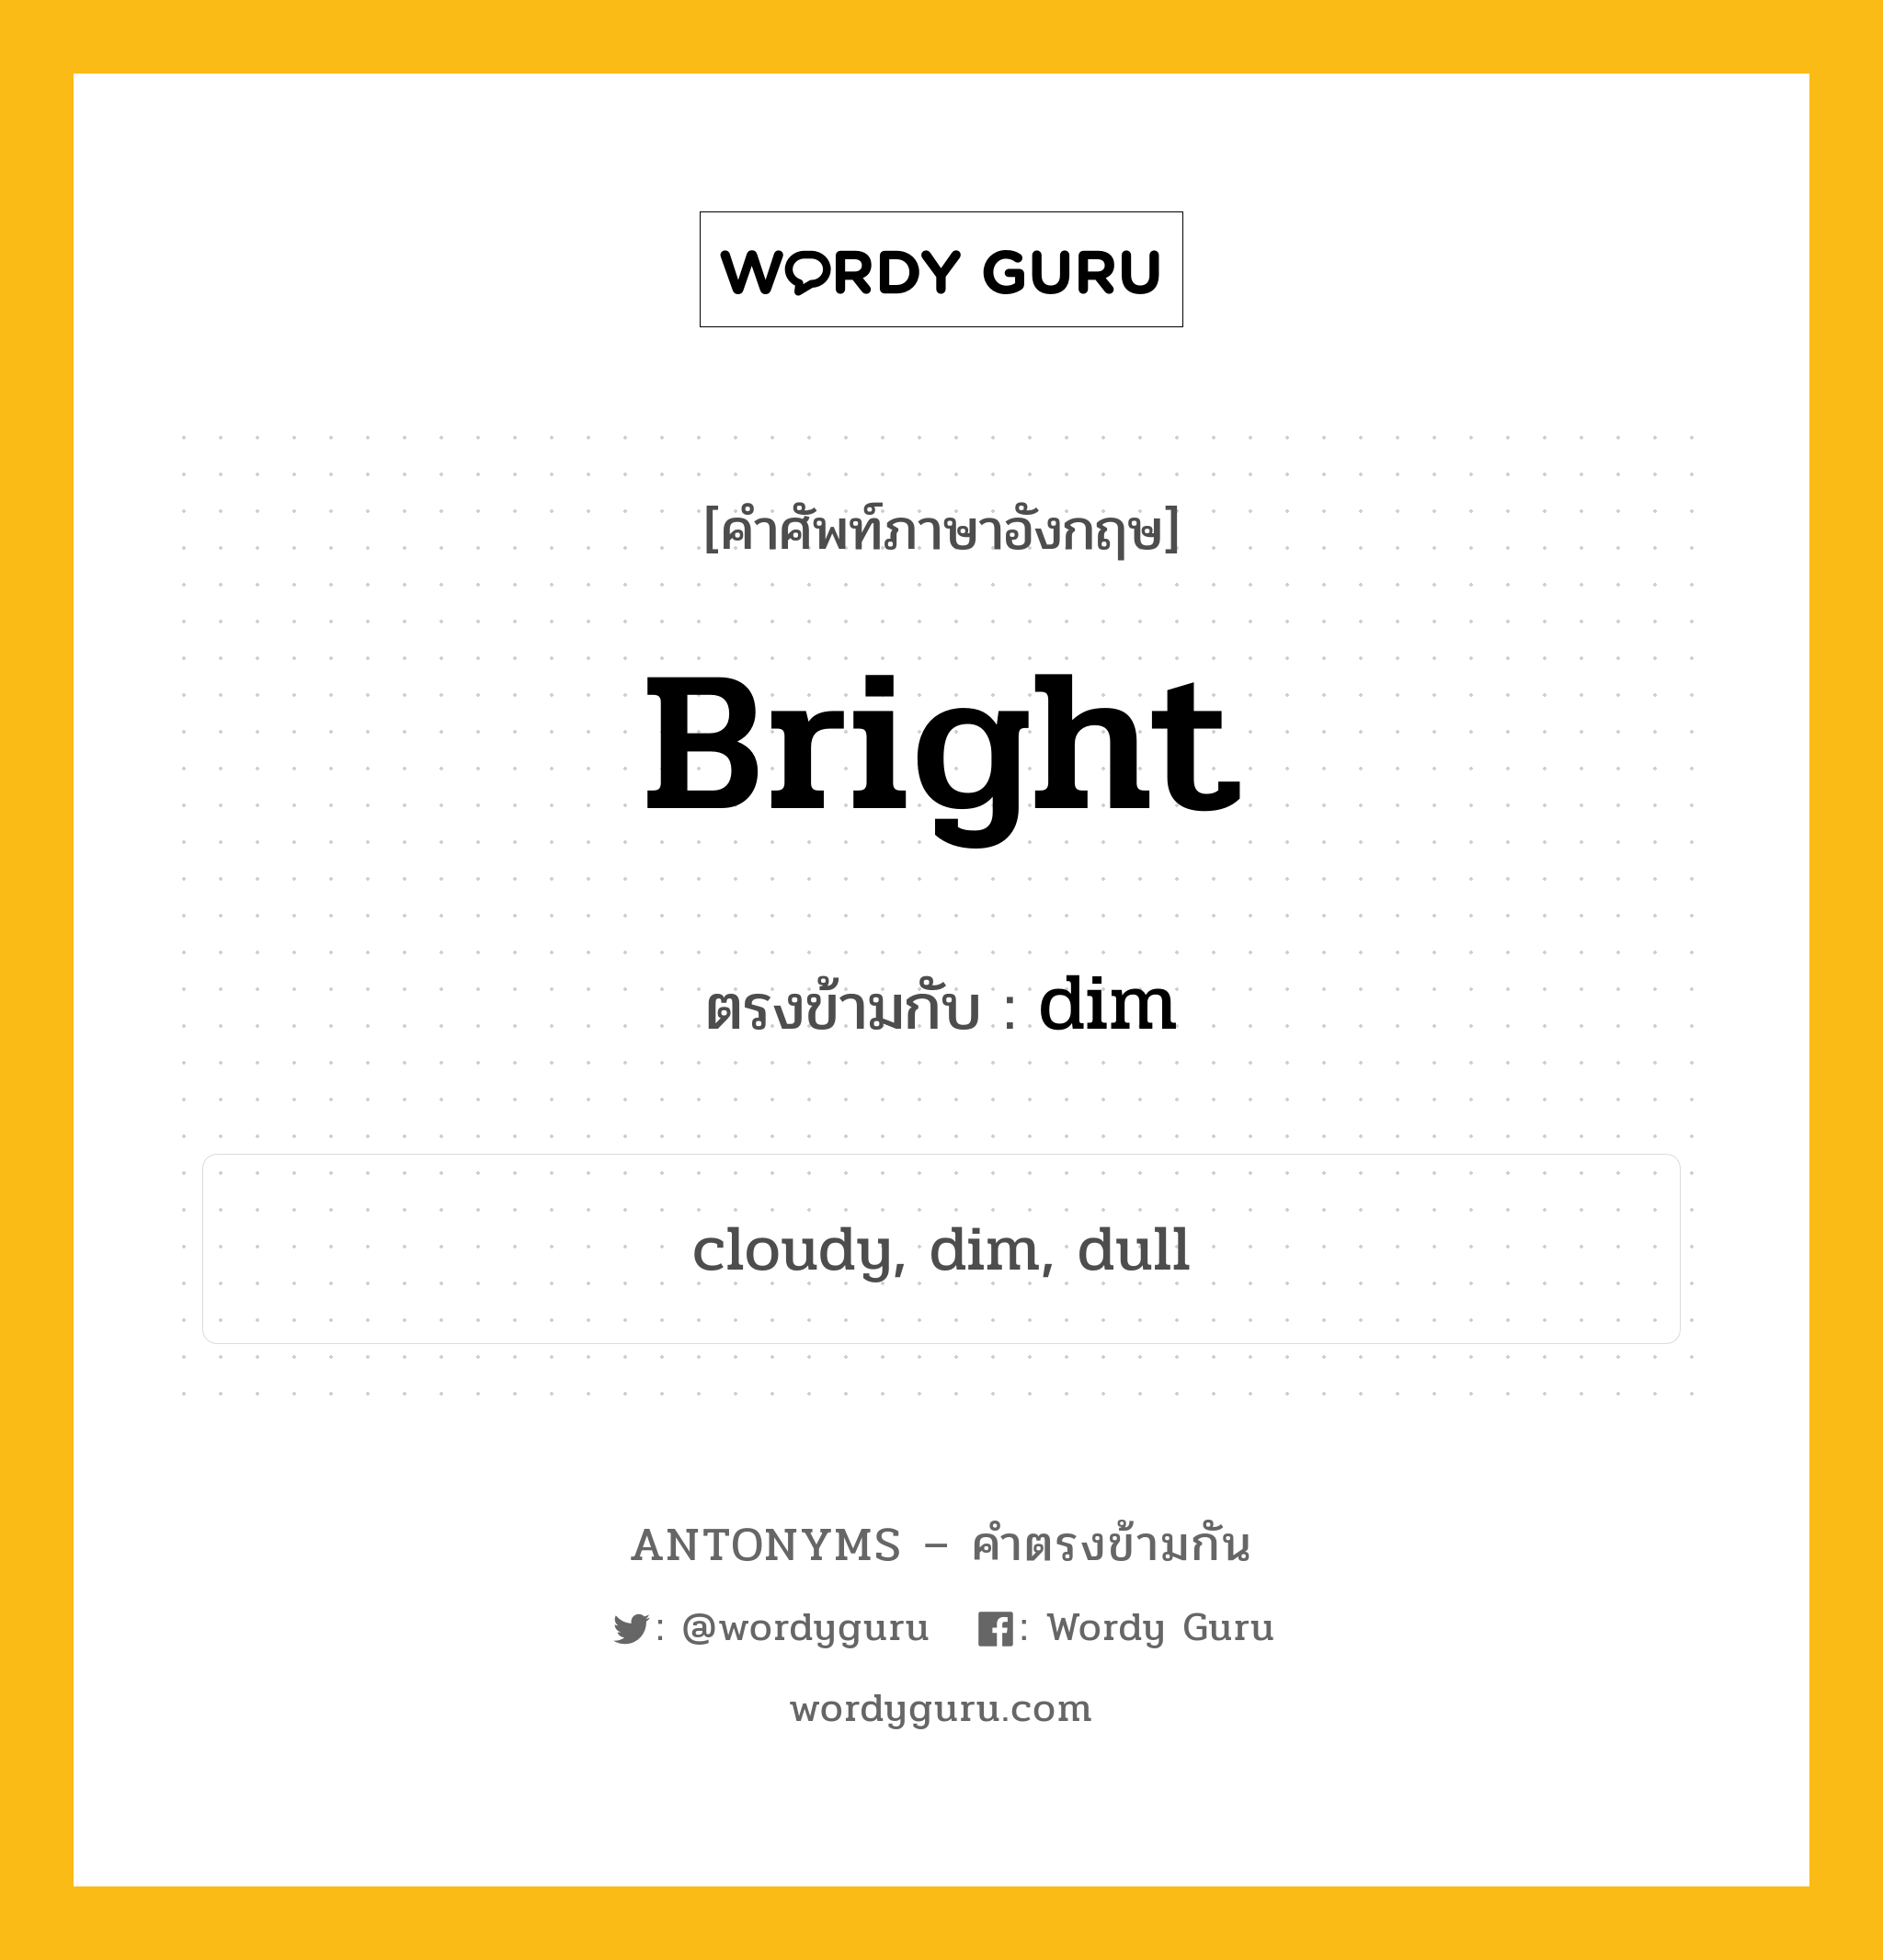 bright เป็นคำตรงข้ามกับคำไหนบ้าง?, คำศัพท์ภาษาอังกฤษ bright ตรงข้ามกับ dim หมวด dim